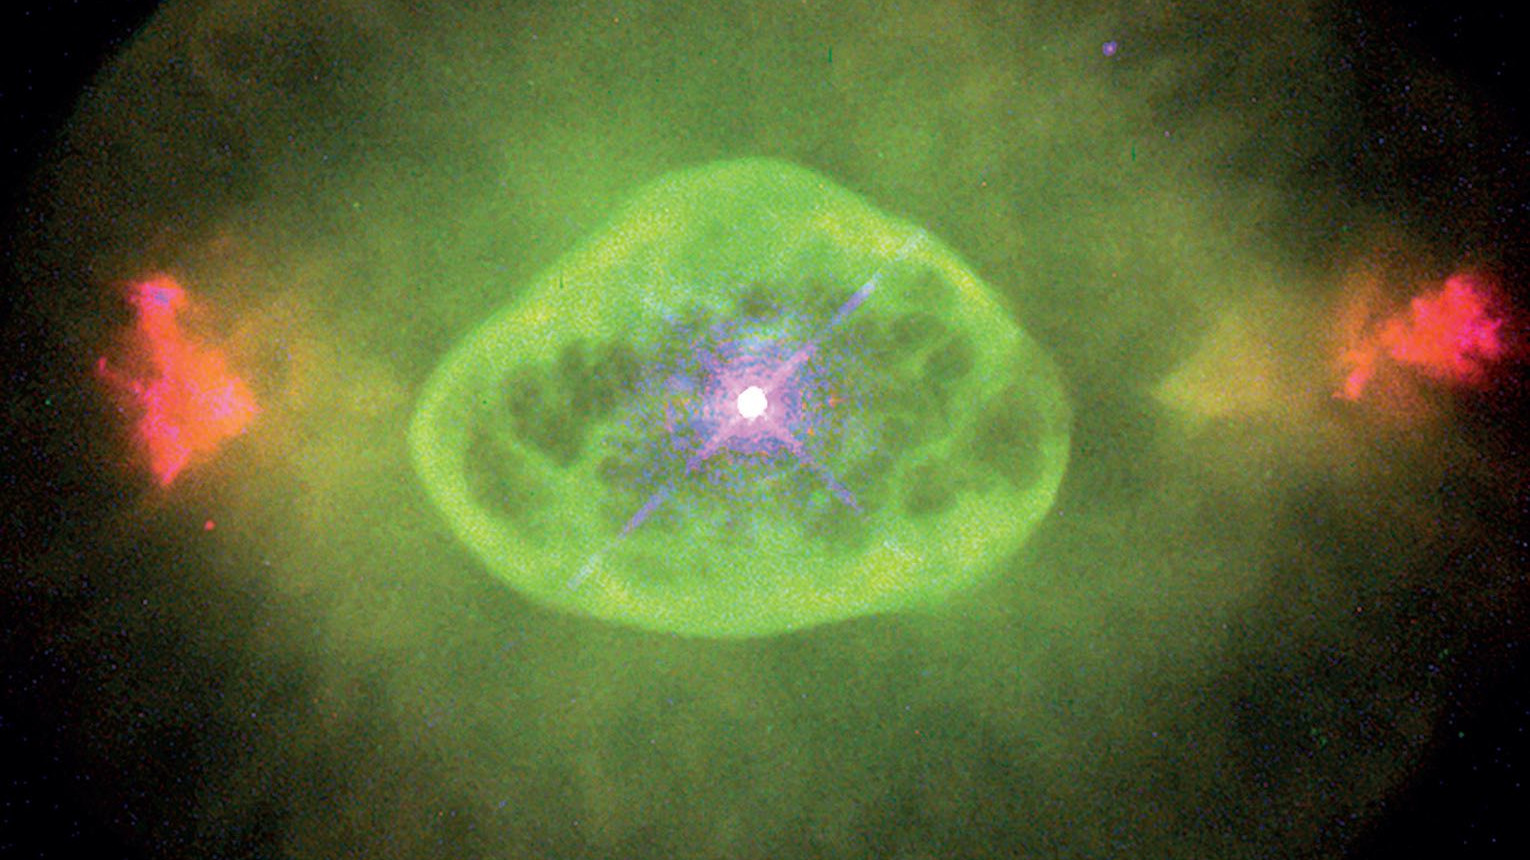 Den blinkande planetariska nebulosan NGC 6826, så som Hubble ser den. B. Balick (University of Washington), J. Alexander (University of Washington), A. Hajian (U.S. Naval Observatory), Y. Terzian (Cornell University), M. Perinotto (Universitetet i Florens), P. Patriarchi (Arcetri-observatoriet) och NASA/ESA